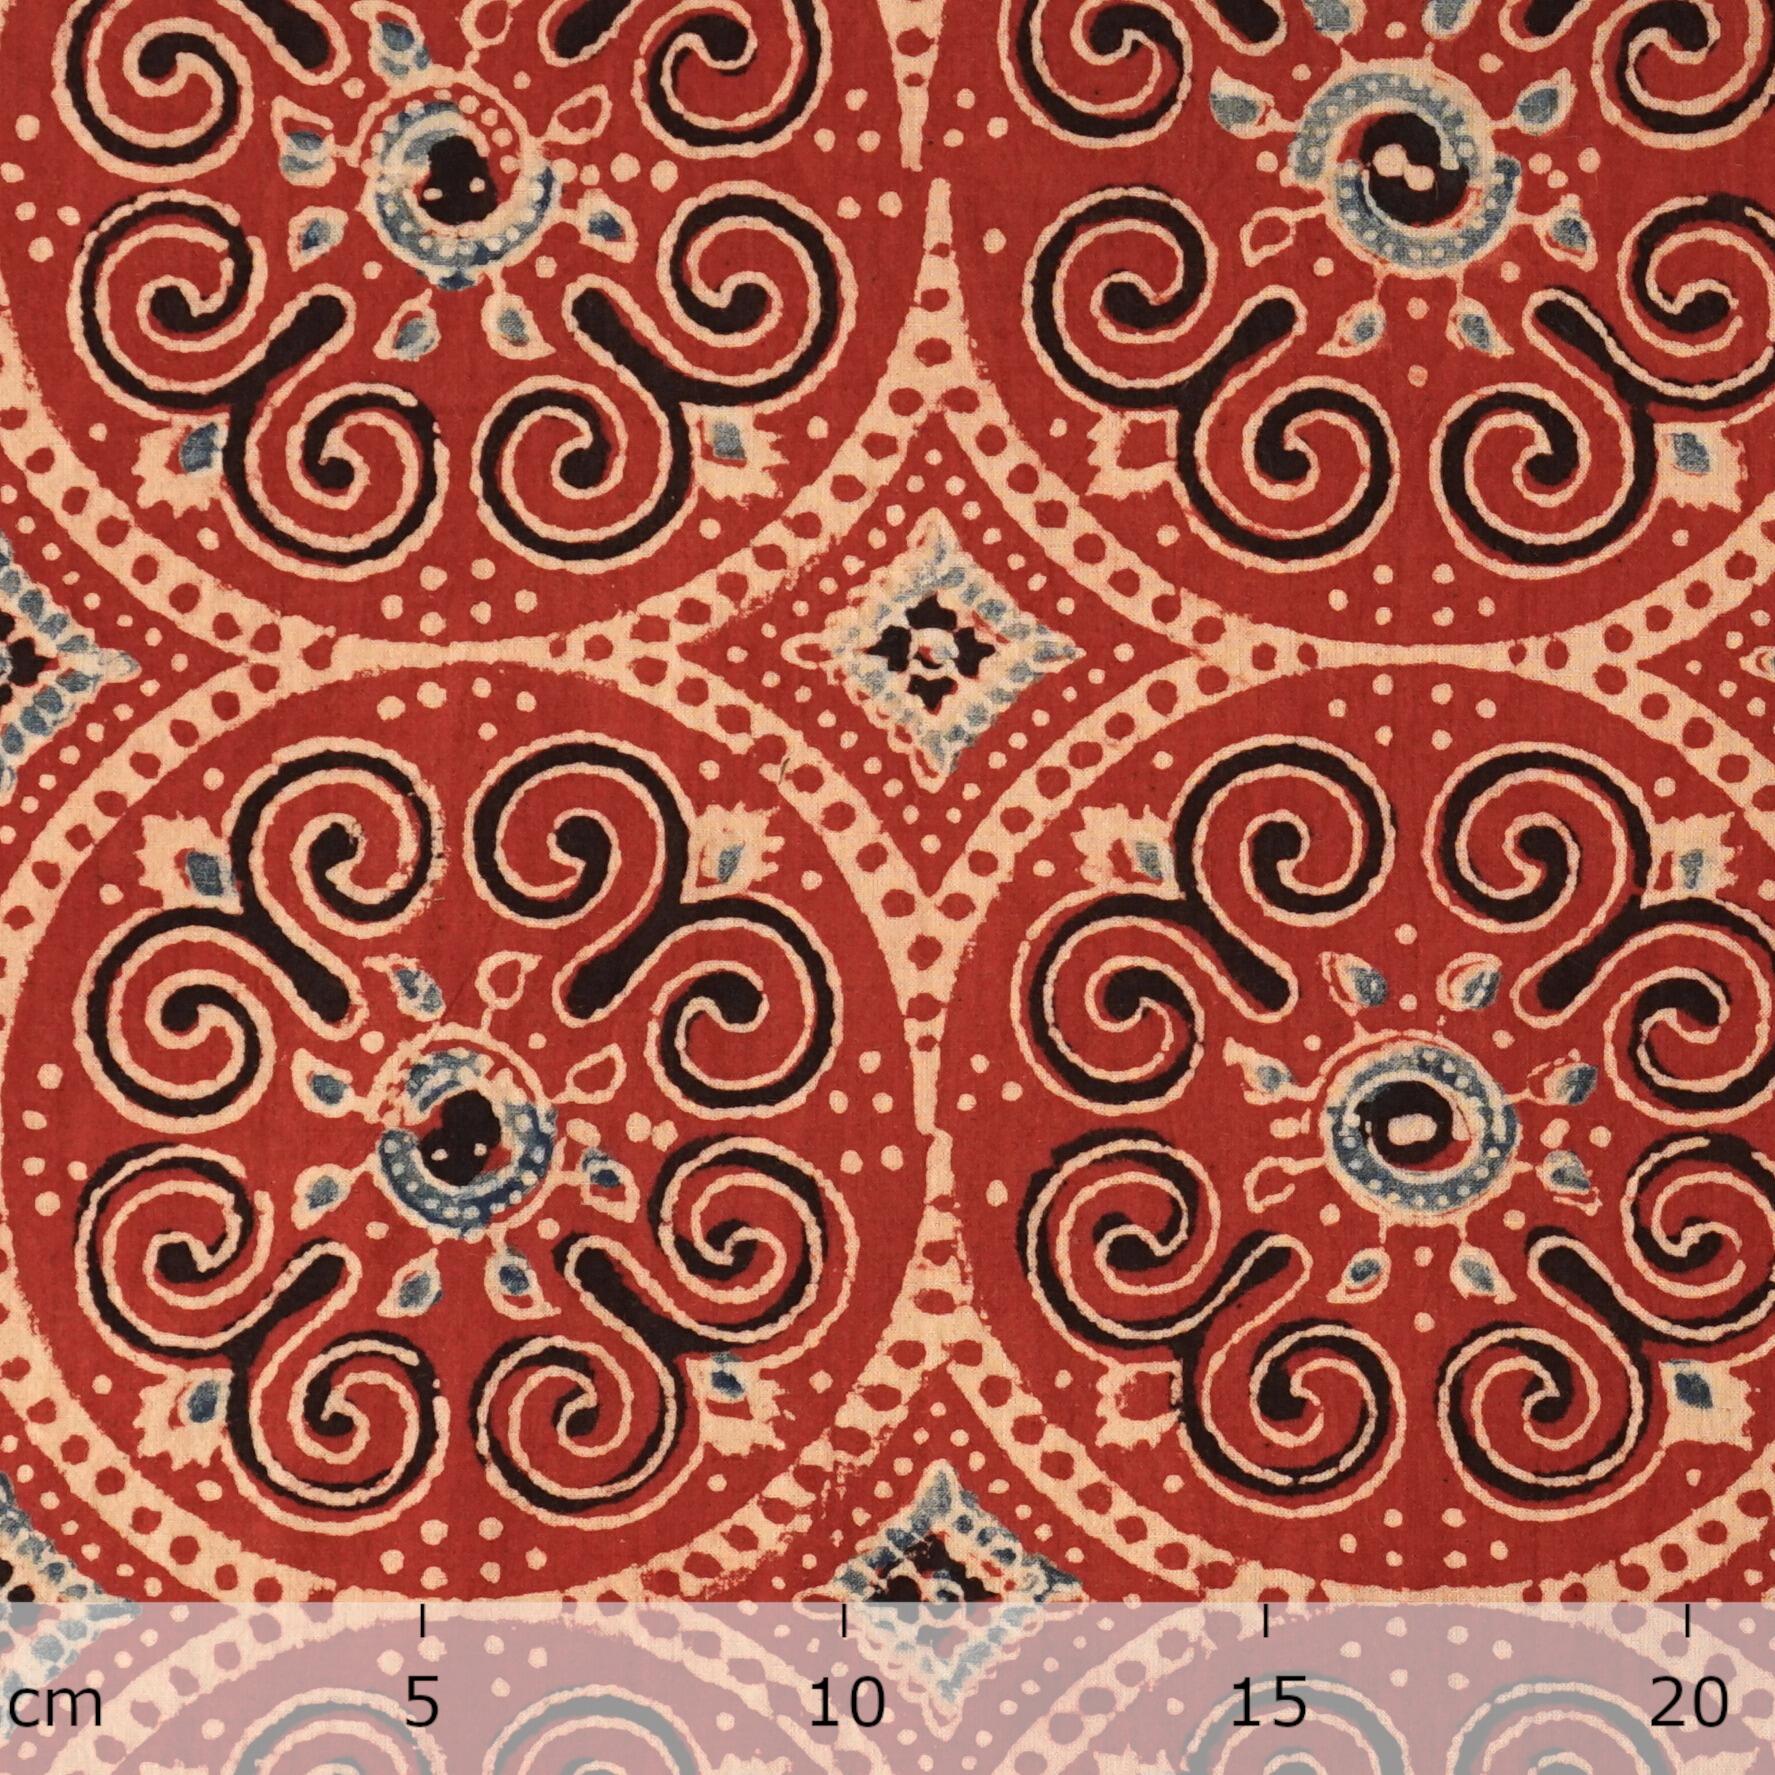 Traditional Ajrak Block-Printed Cotton - Ratatouille Print - Iron Black, Alizarin Red, Indigo - Ruler